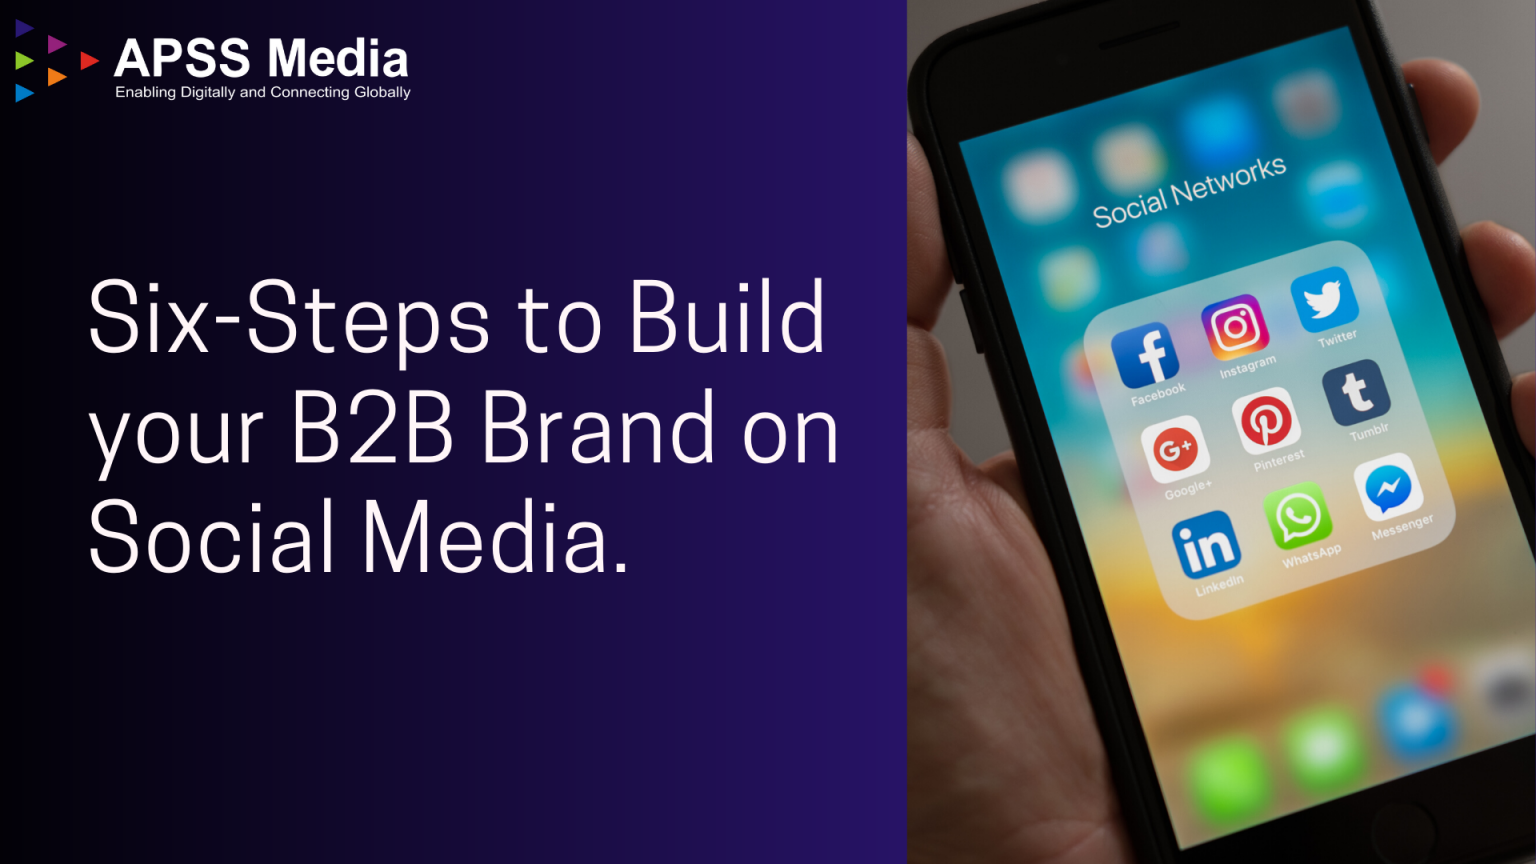 Six-Steps to Build your B2B Brand on Social Media. - APSS Media